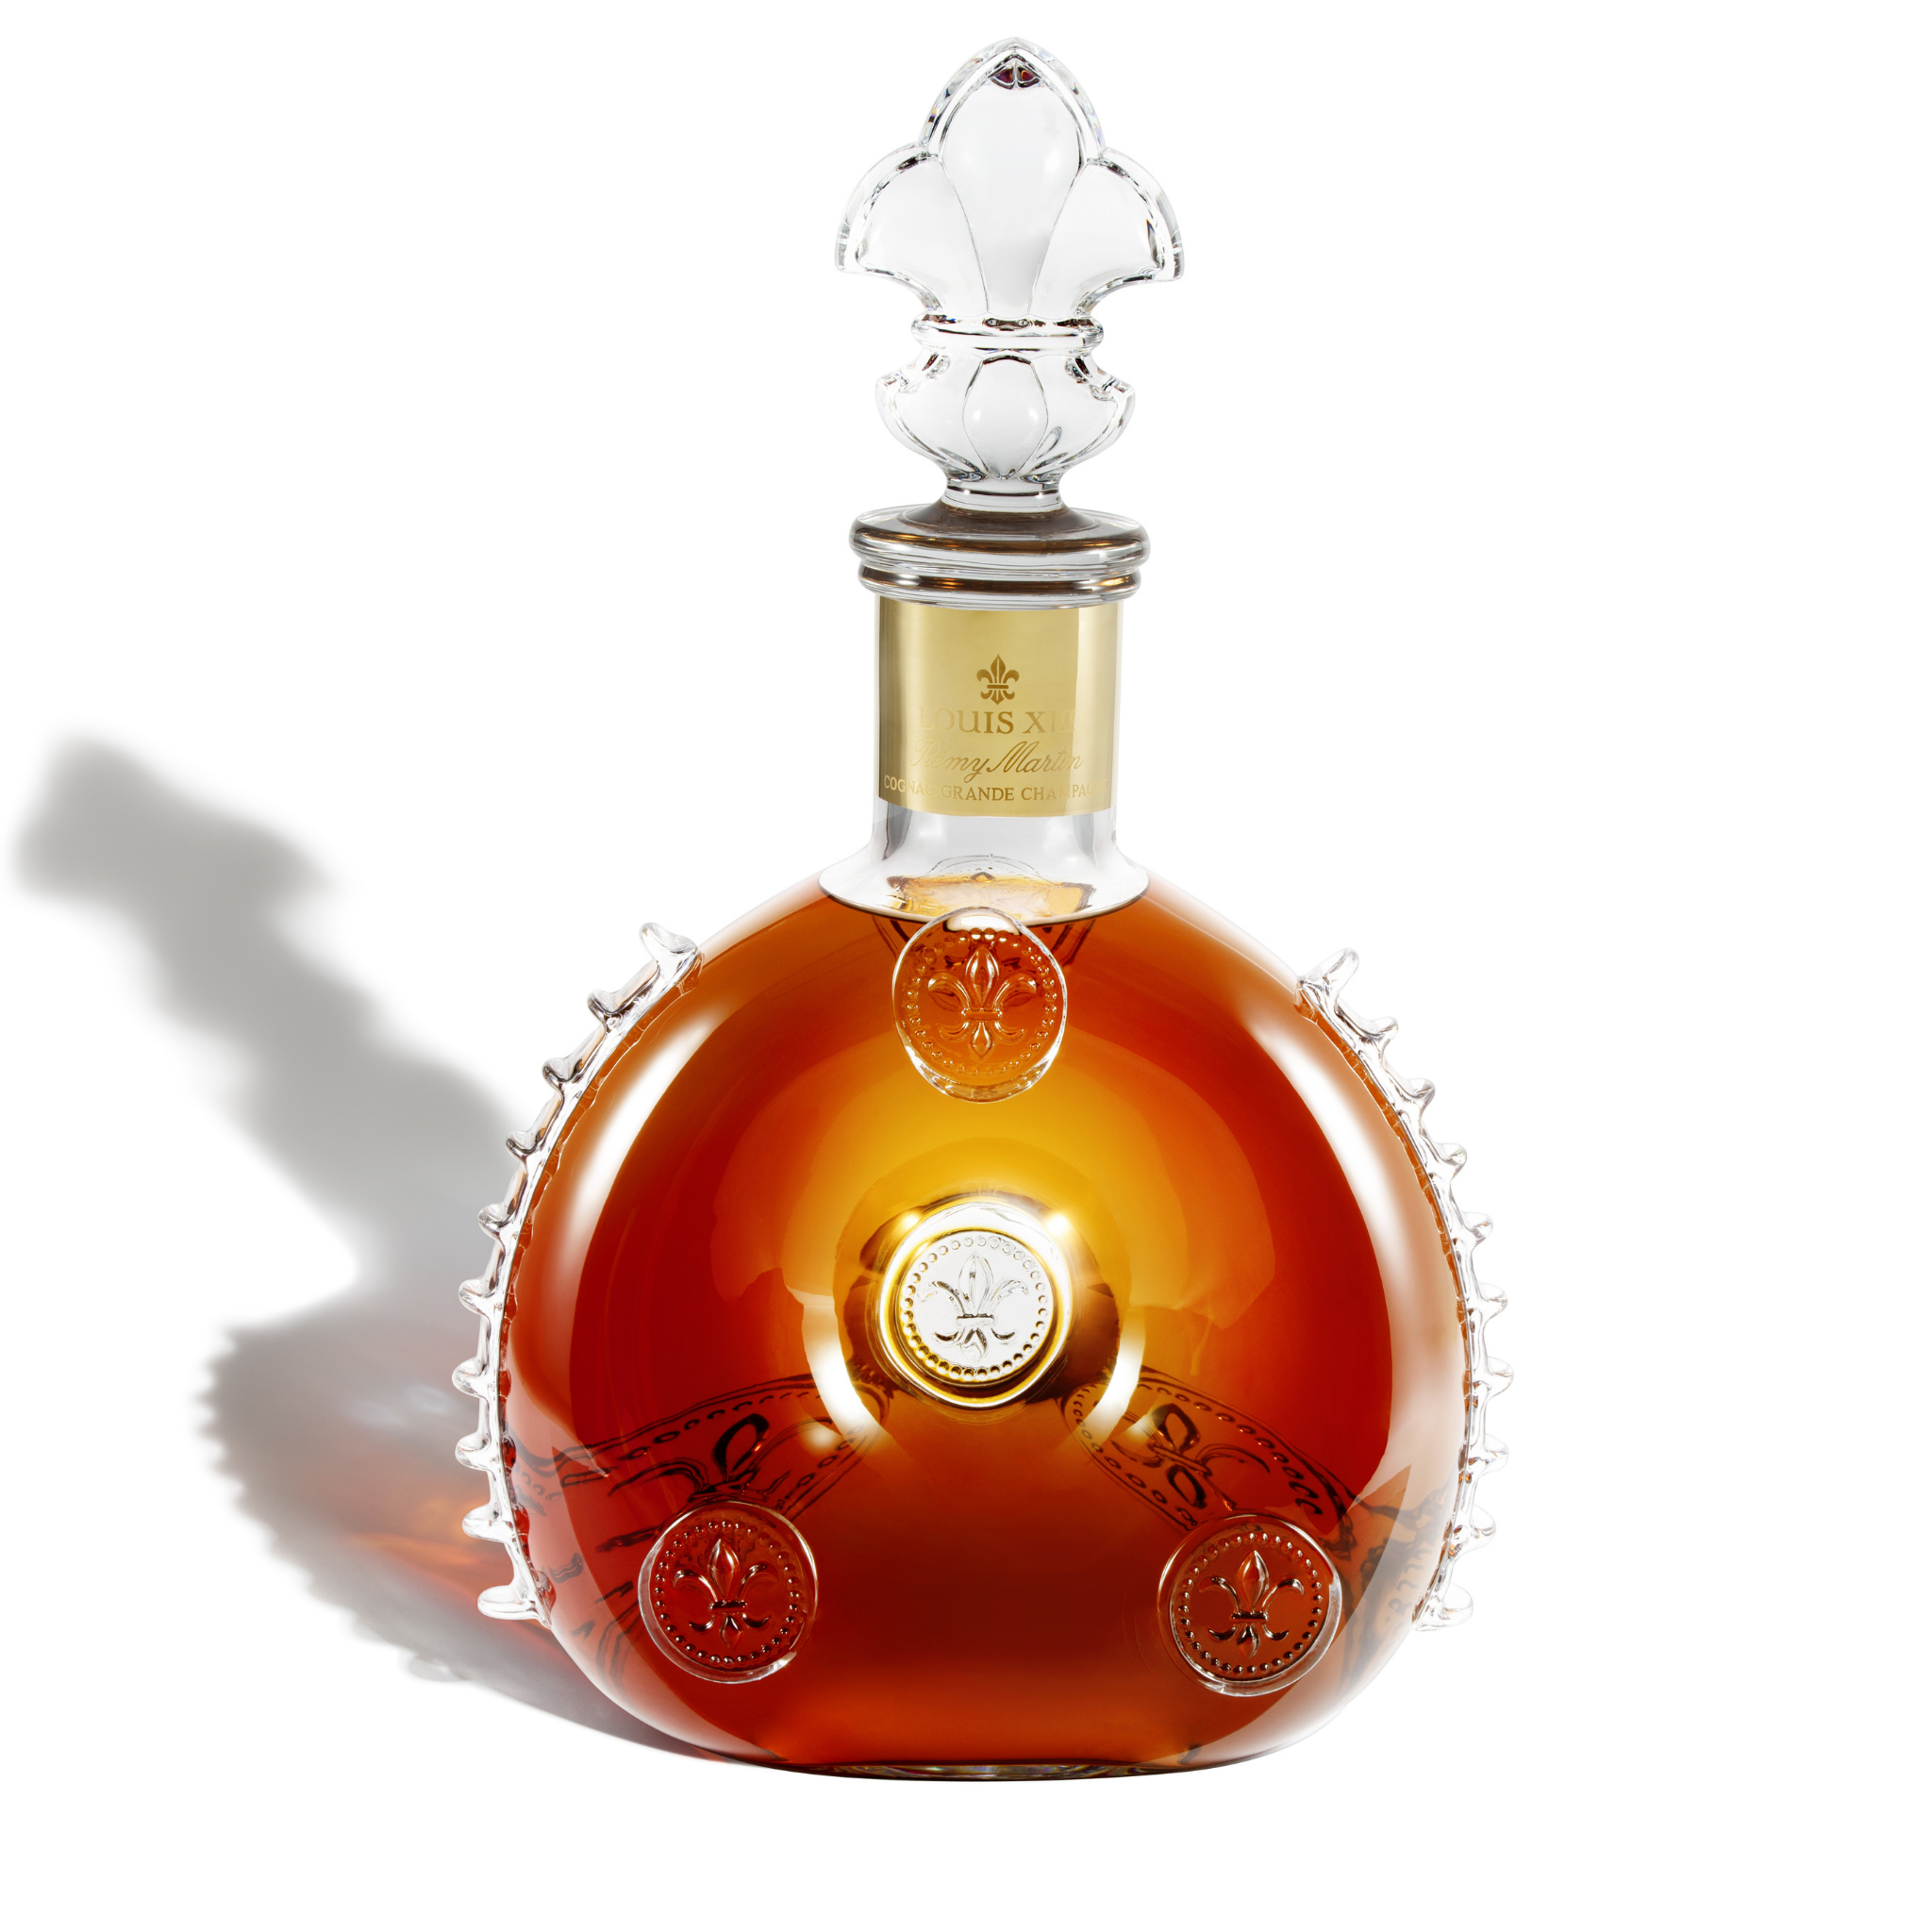 Remy Martin Louis XIII Cognac - Musthave Malts: your cognac source